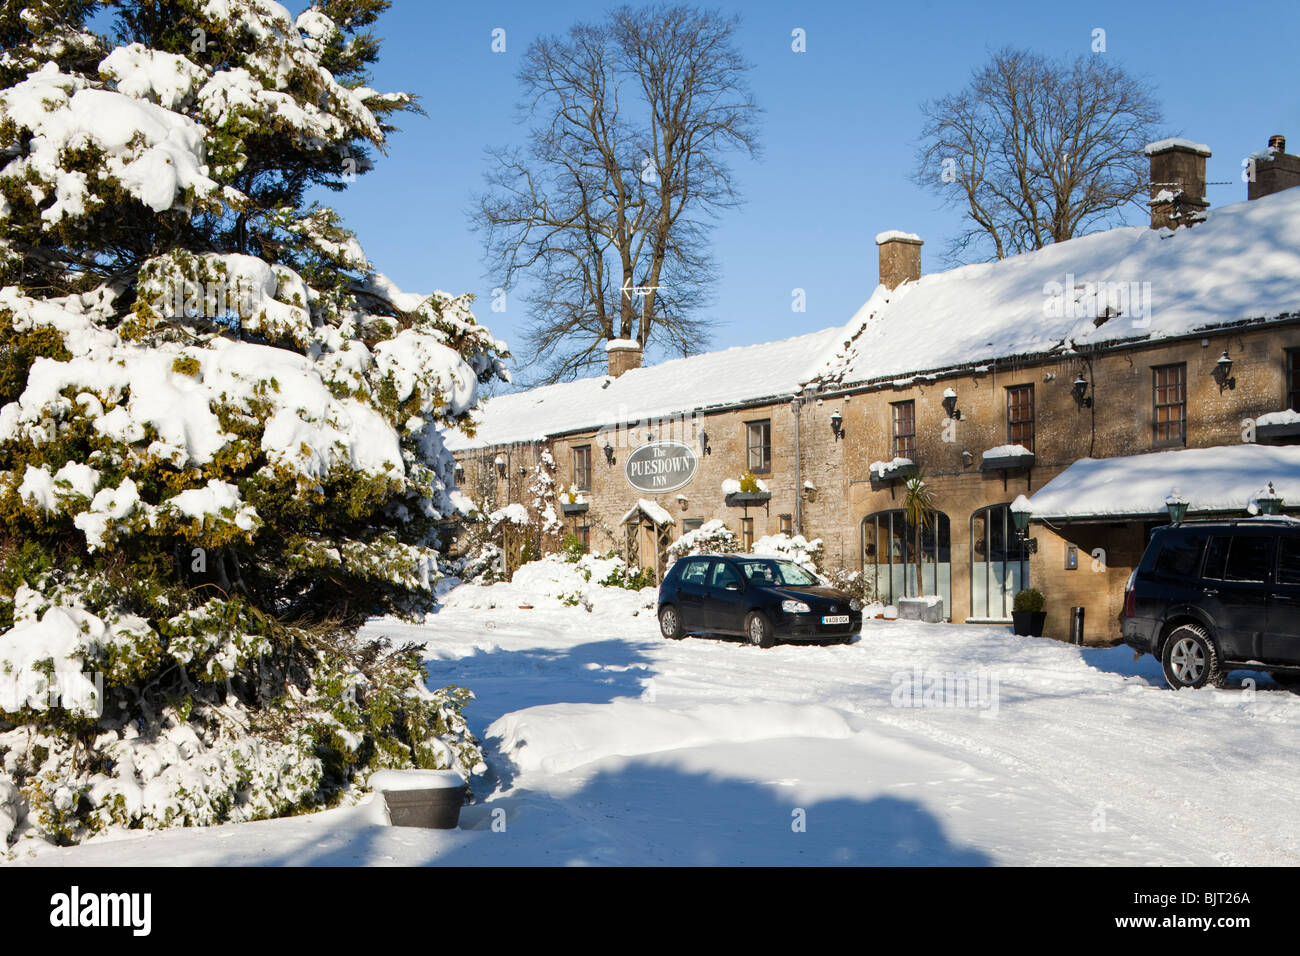 Winter snow on the Cotswolds at the Puesdown Inn, near Hazleton, Gloucestershire Stock Photo